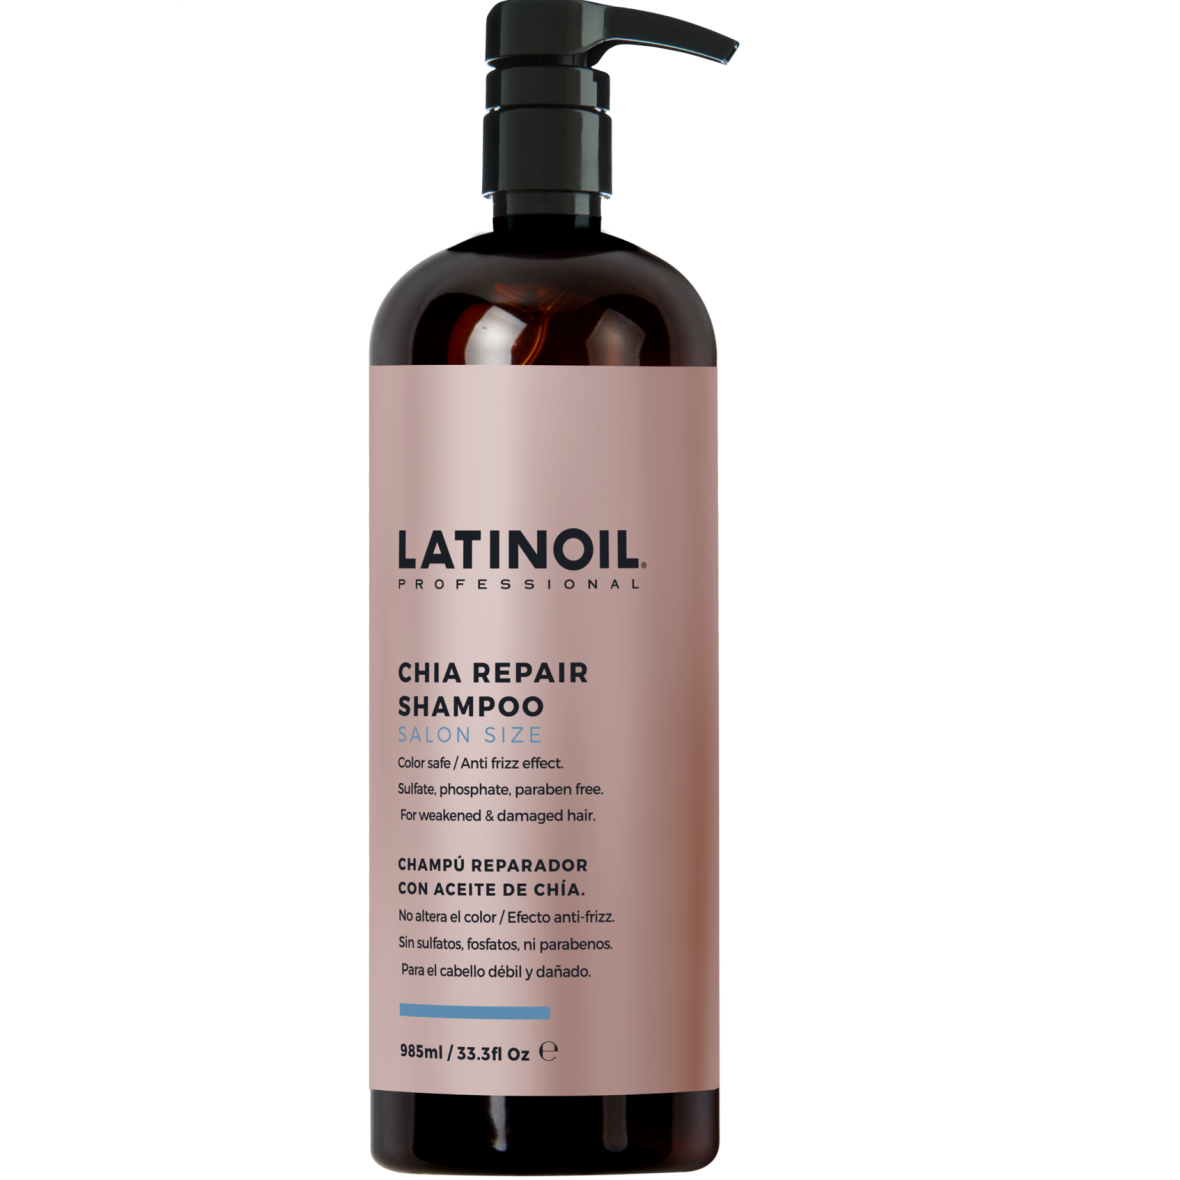 LatinOil Chia Repair Shampoo 985ml - Restaura cabello débil y dañado, es libre de sulfatos, parabénos y fosfátos